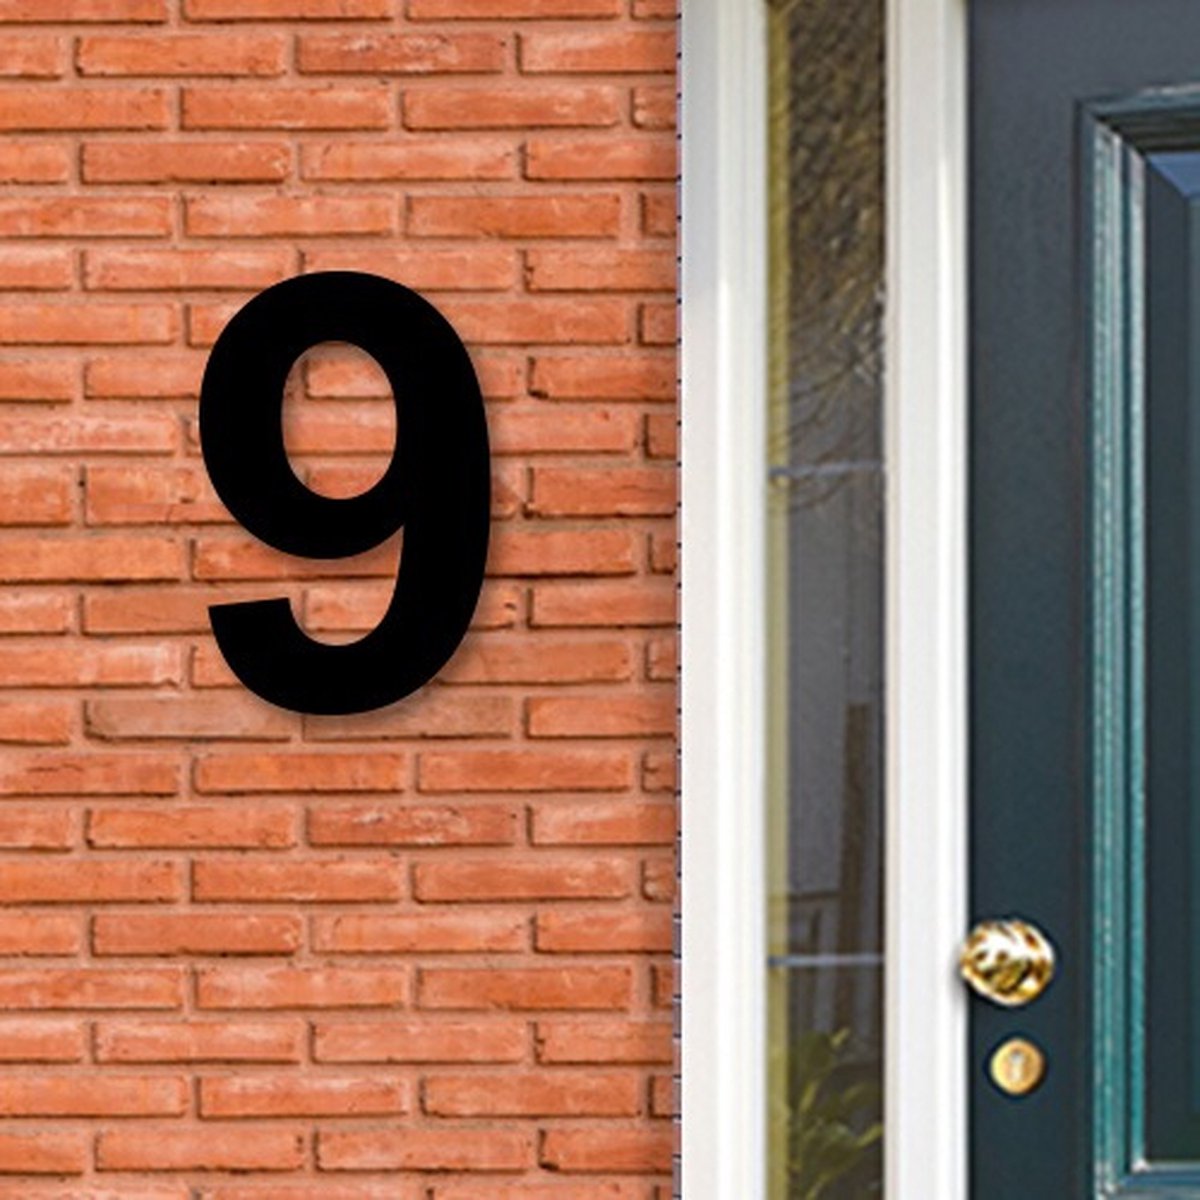 Huisnummer Acryl zwart, cijfer 9, Hoogte 16cm - Huisnummers - Huisnummer zwart - Huisnummer modern - Gratis verzending!